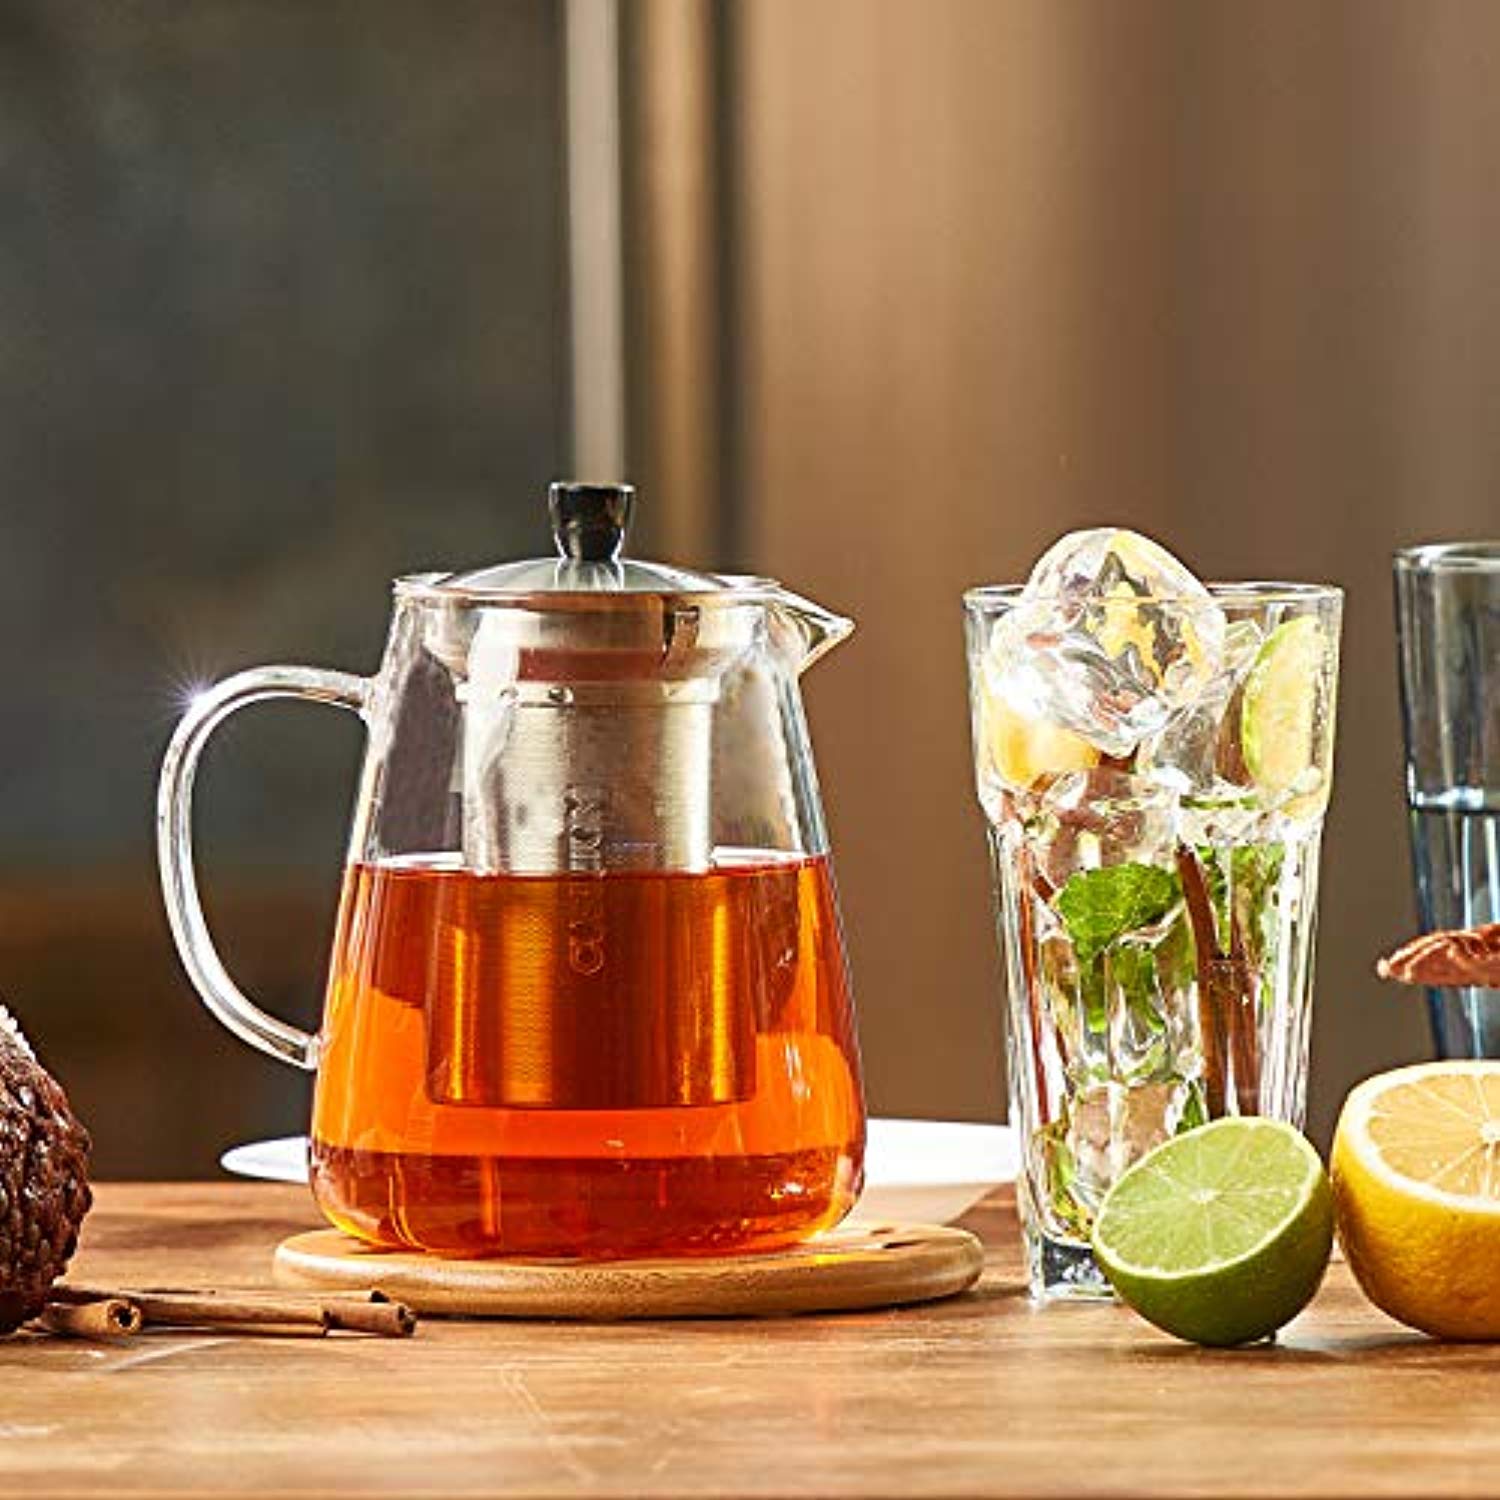 Cusinium Glass Teapot Kettle Review: Stellar Performance